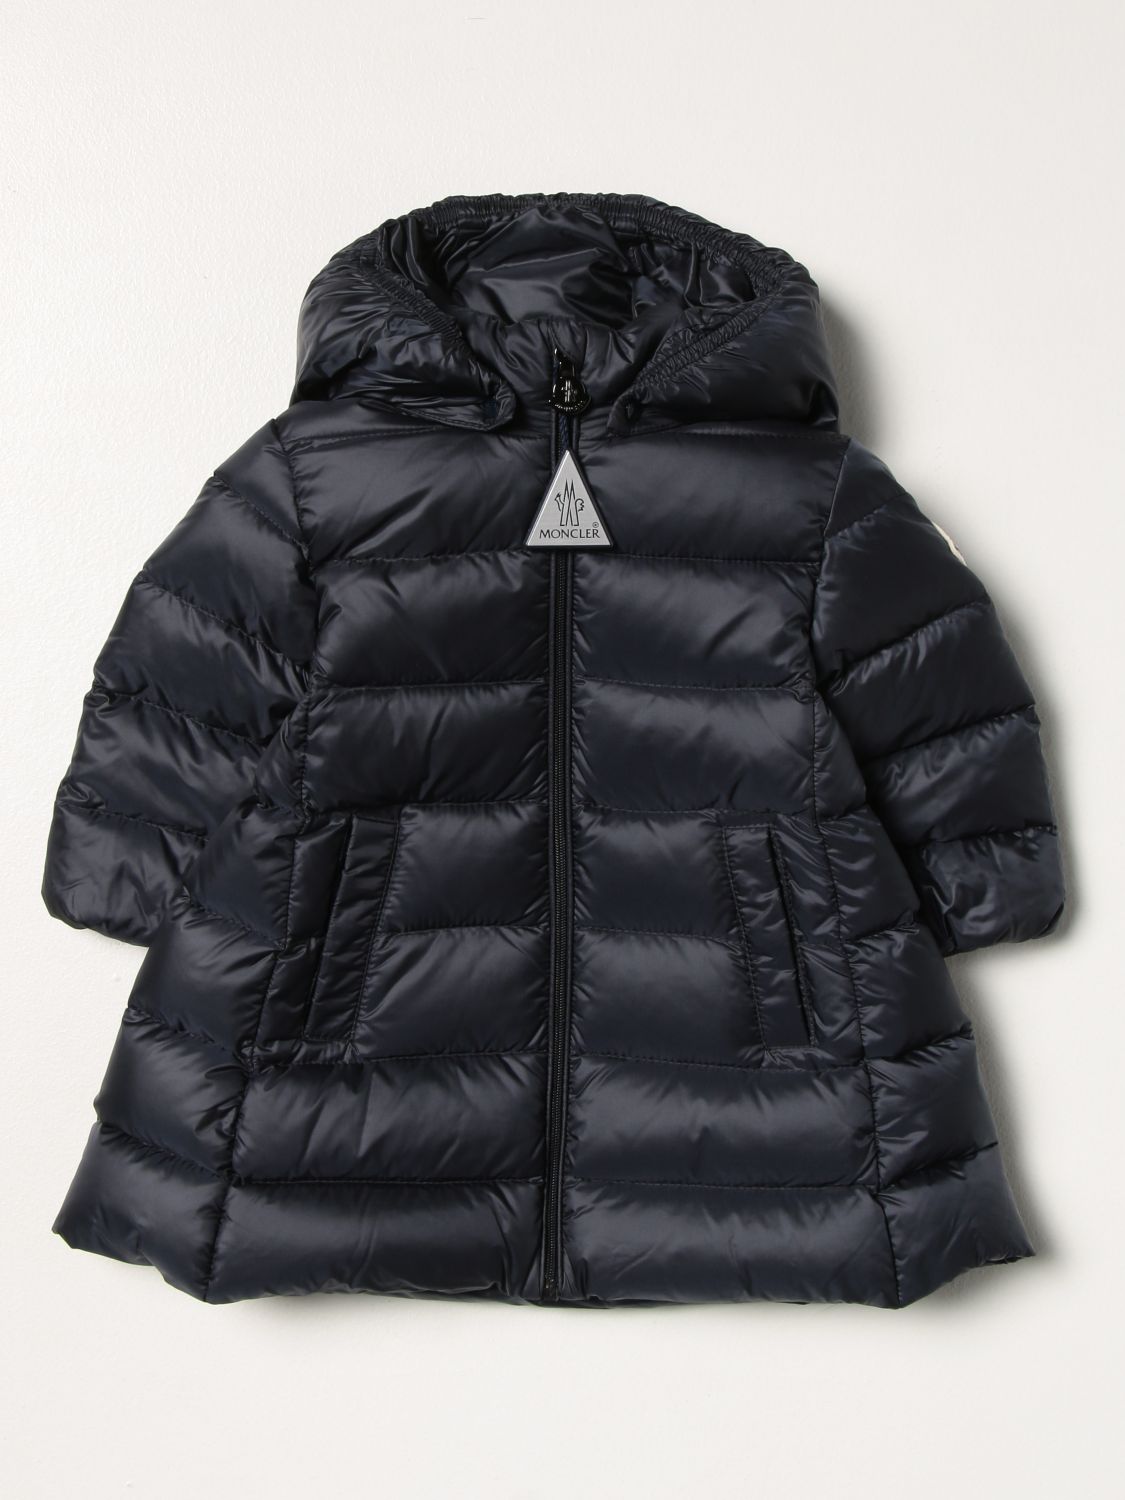 Moncler nylon jacket with hood